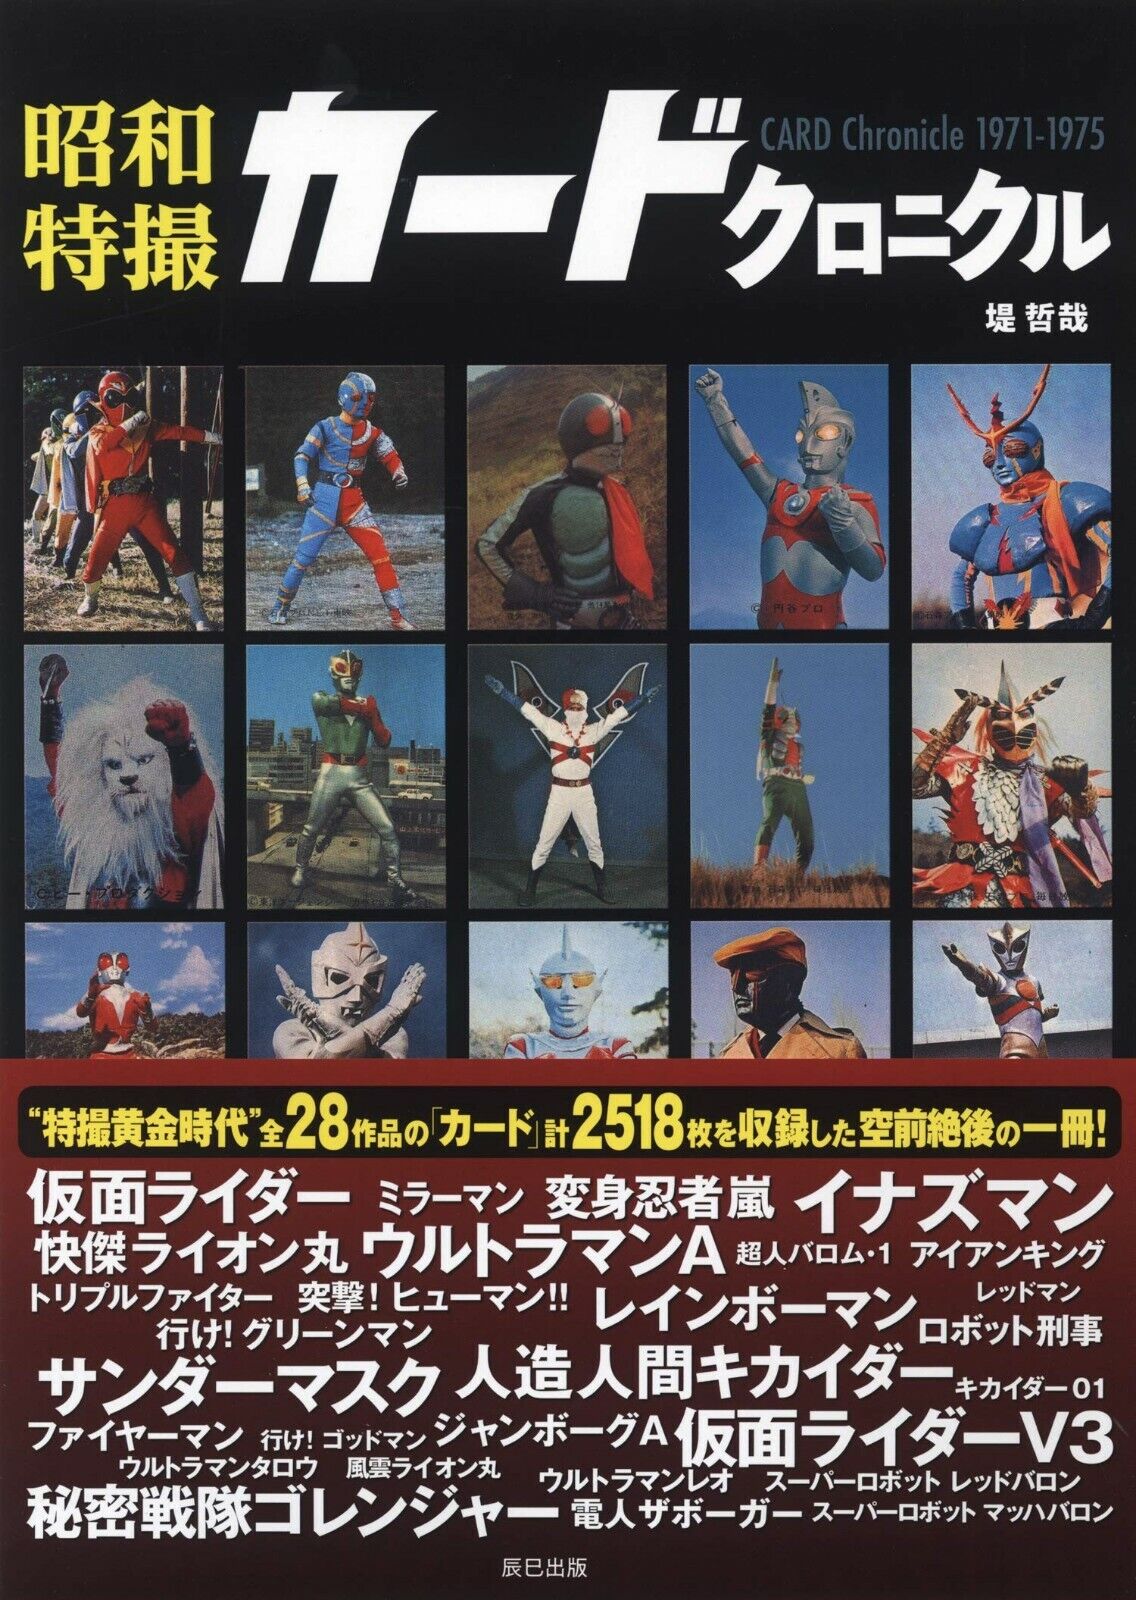 Showa Era Tokusatsu Superhero Card Chronicle | Japan Kamen Rider Mirrorman